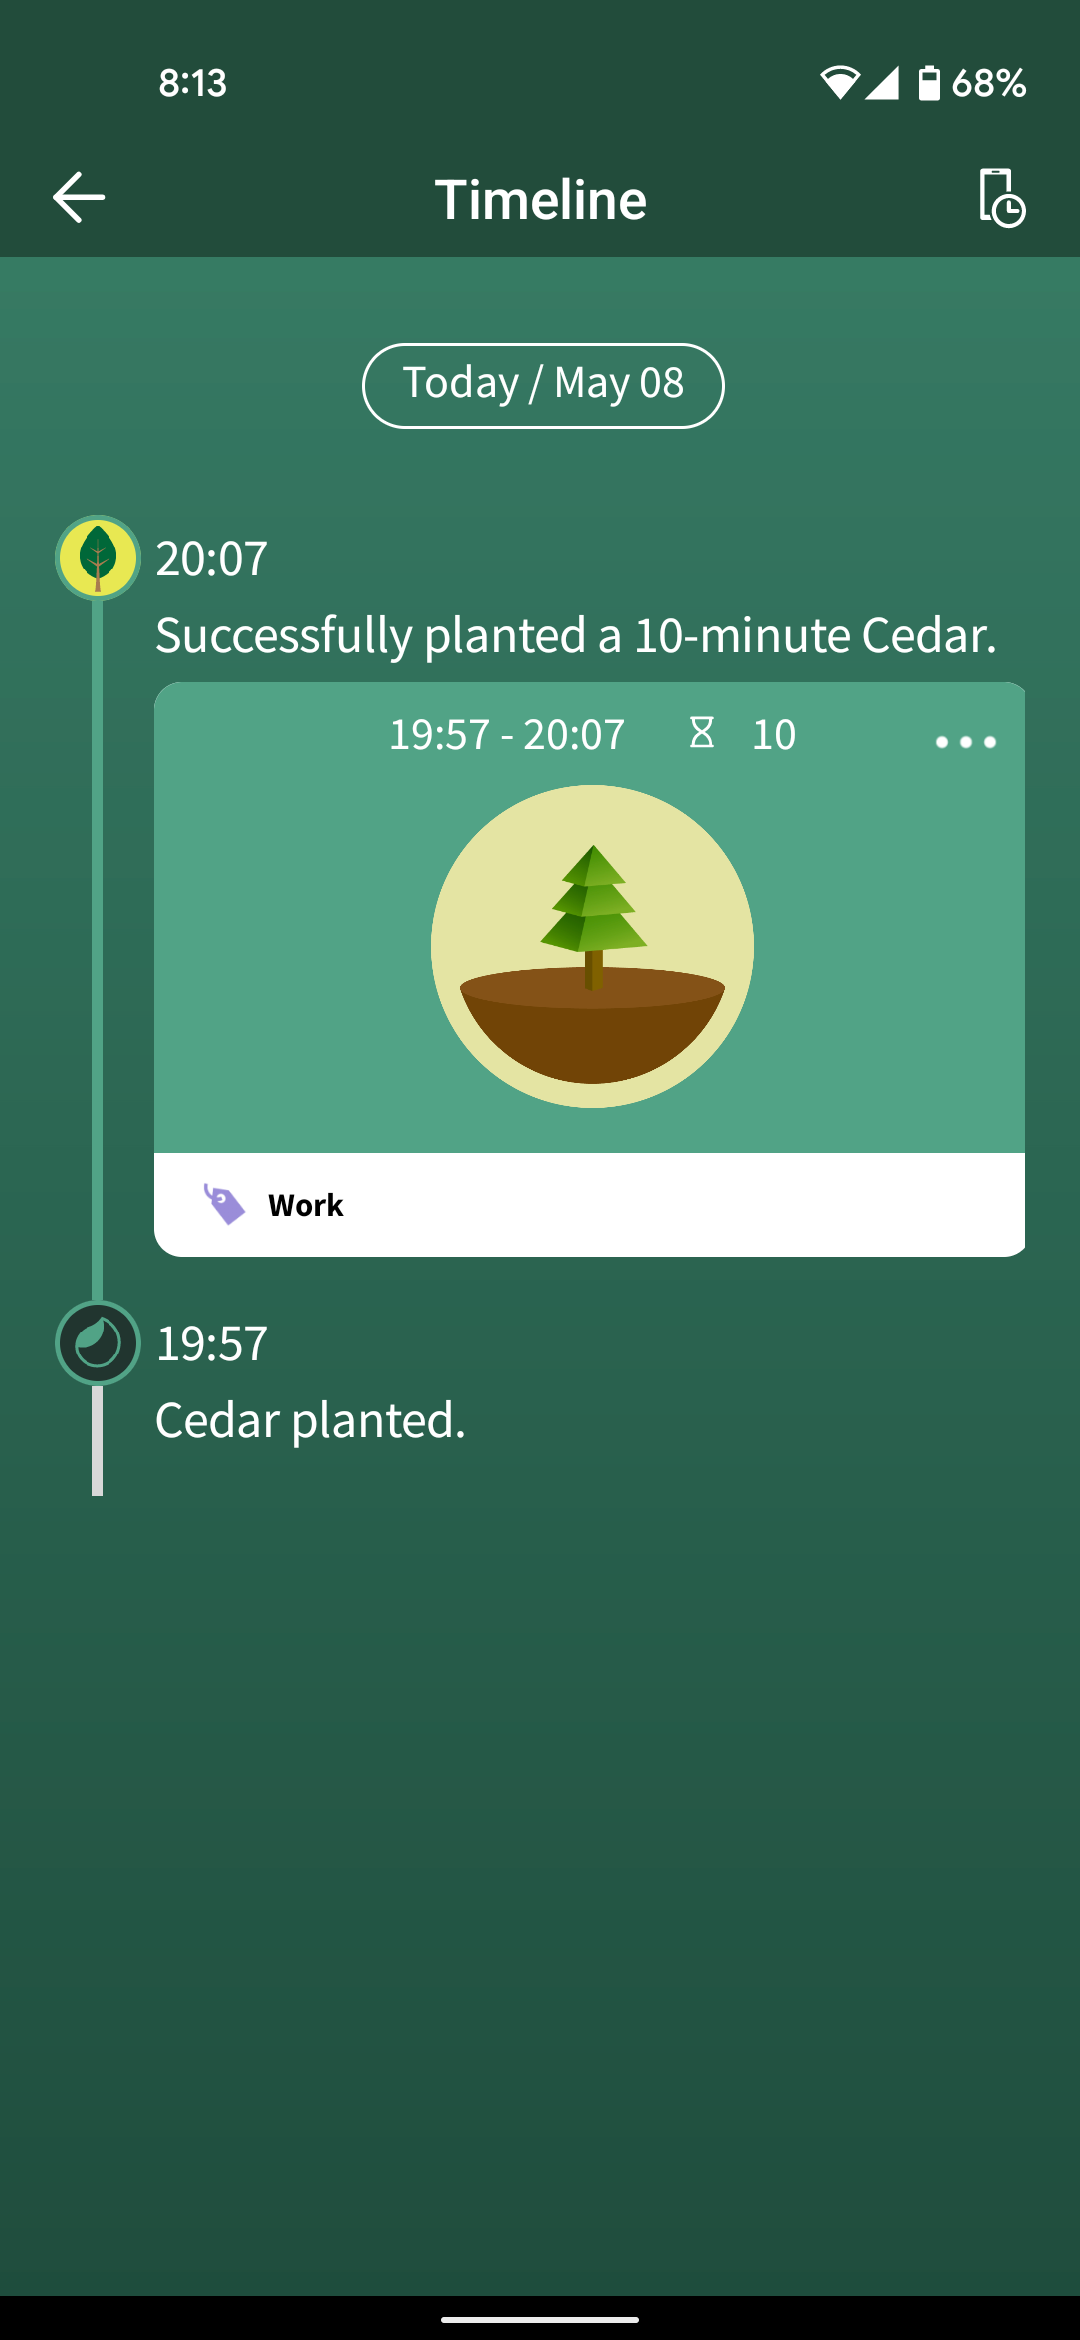 Your Forest app timeline